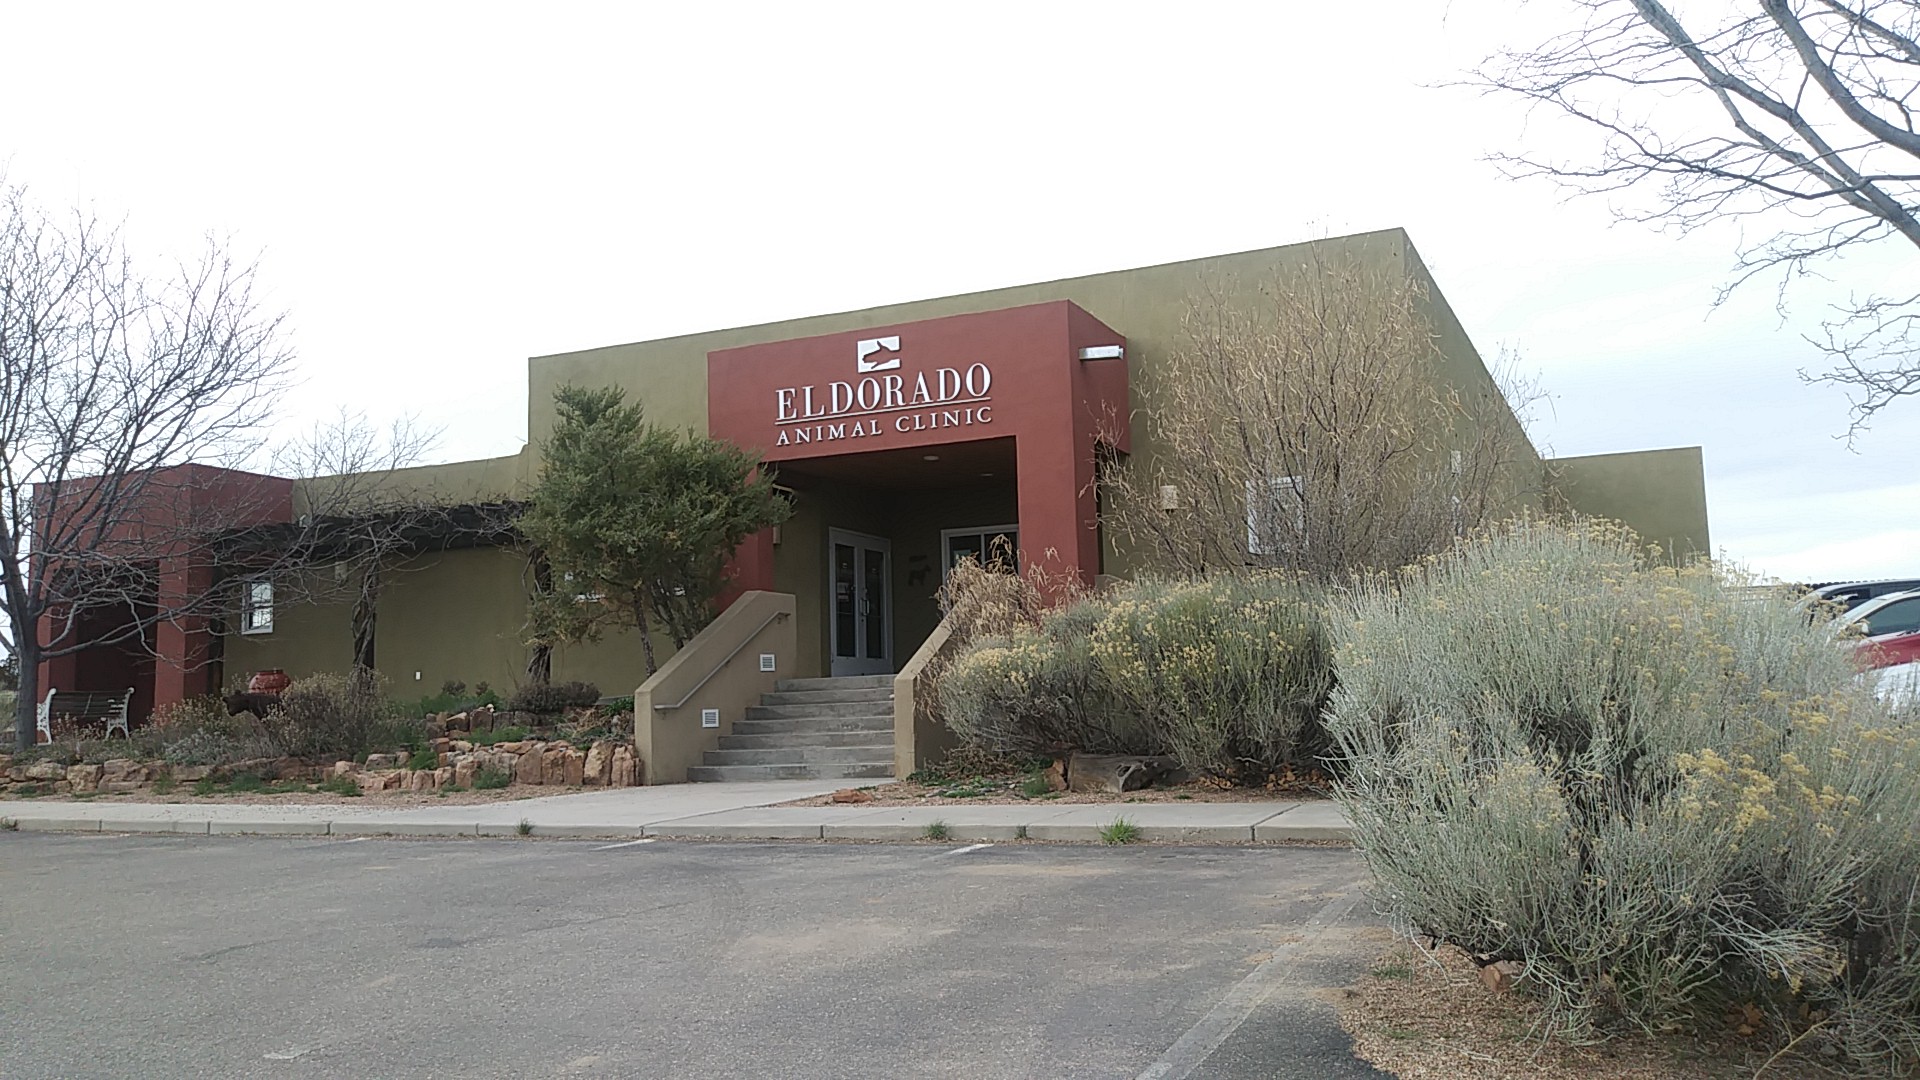 Eldorado Animal Clinic: Byrne T Murt DVM and Associates